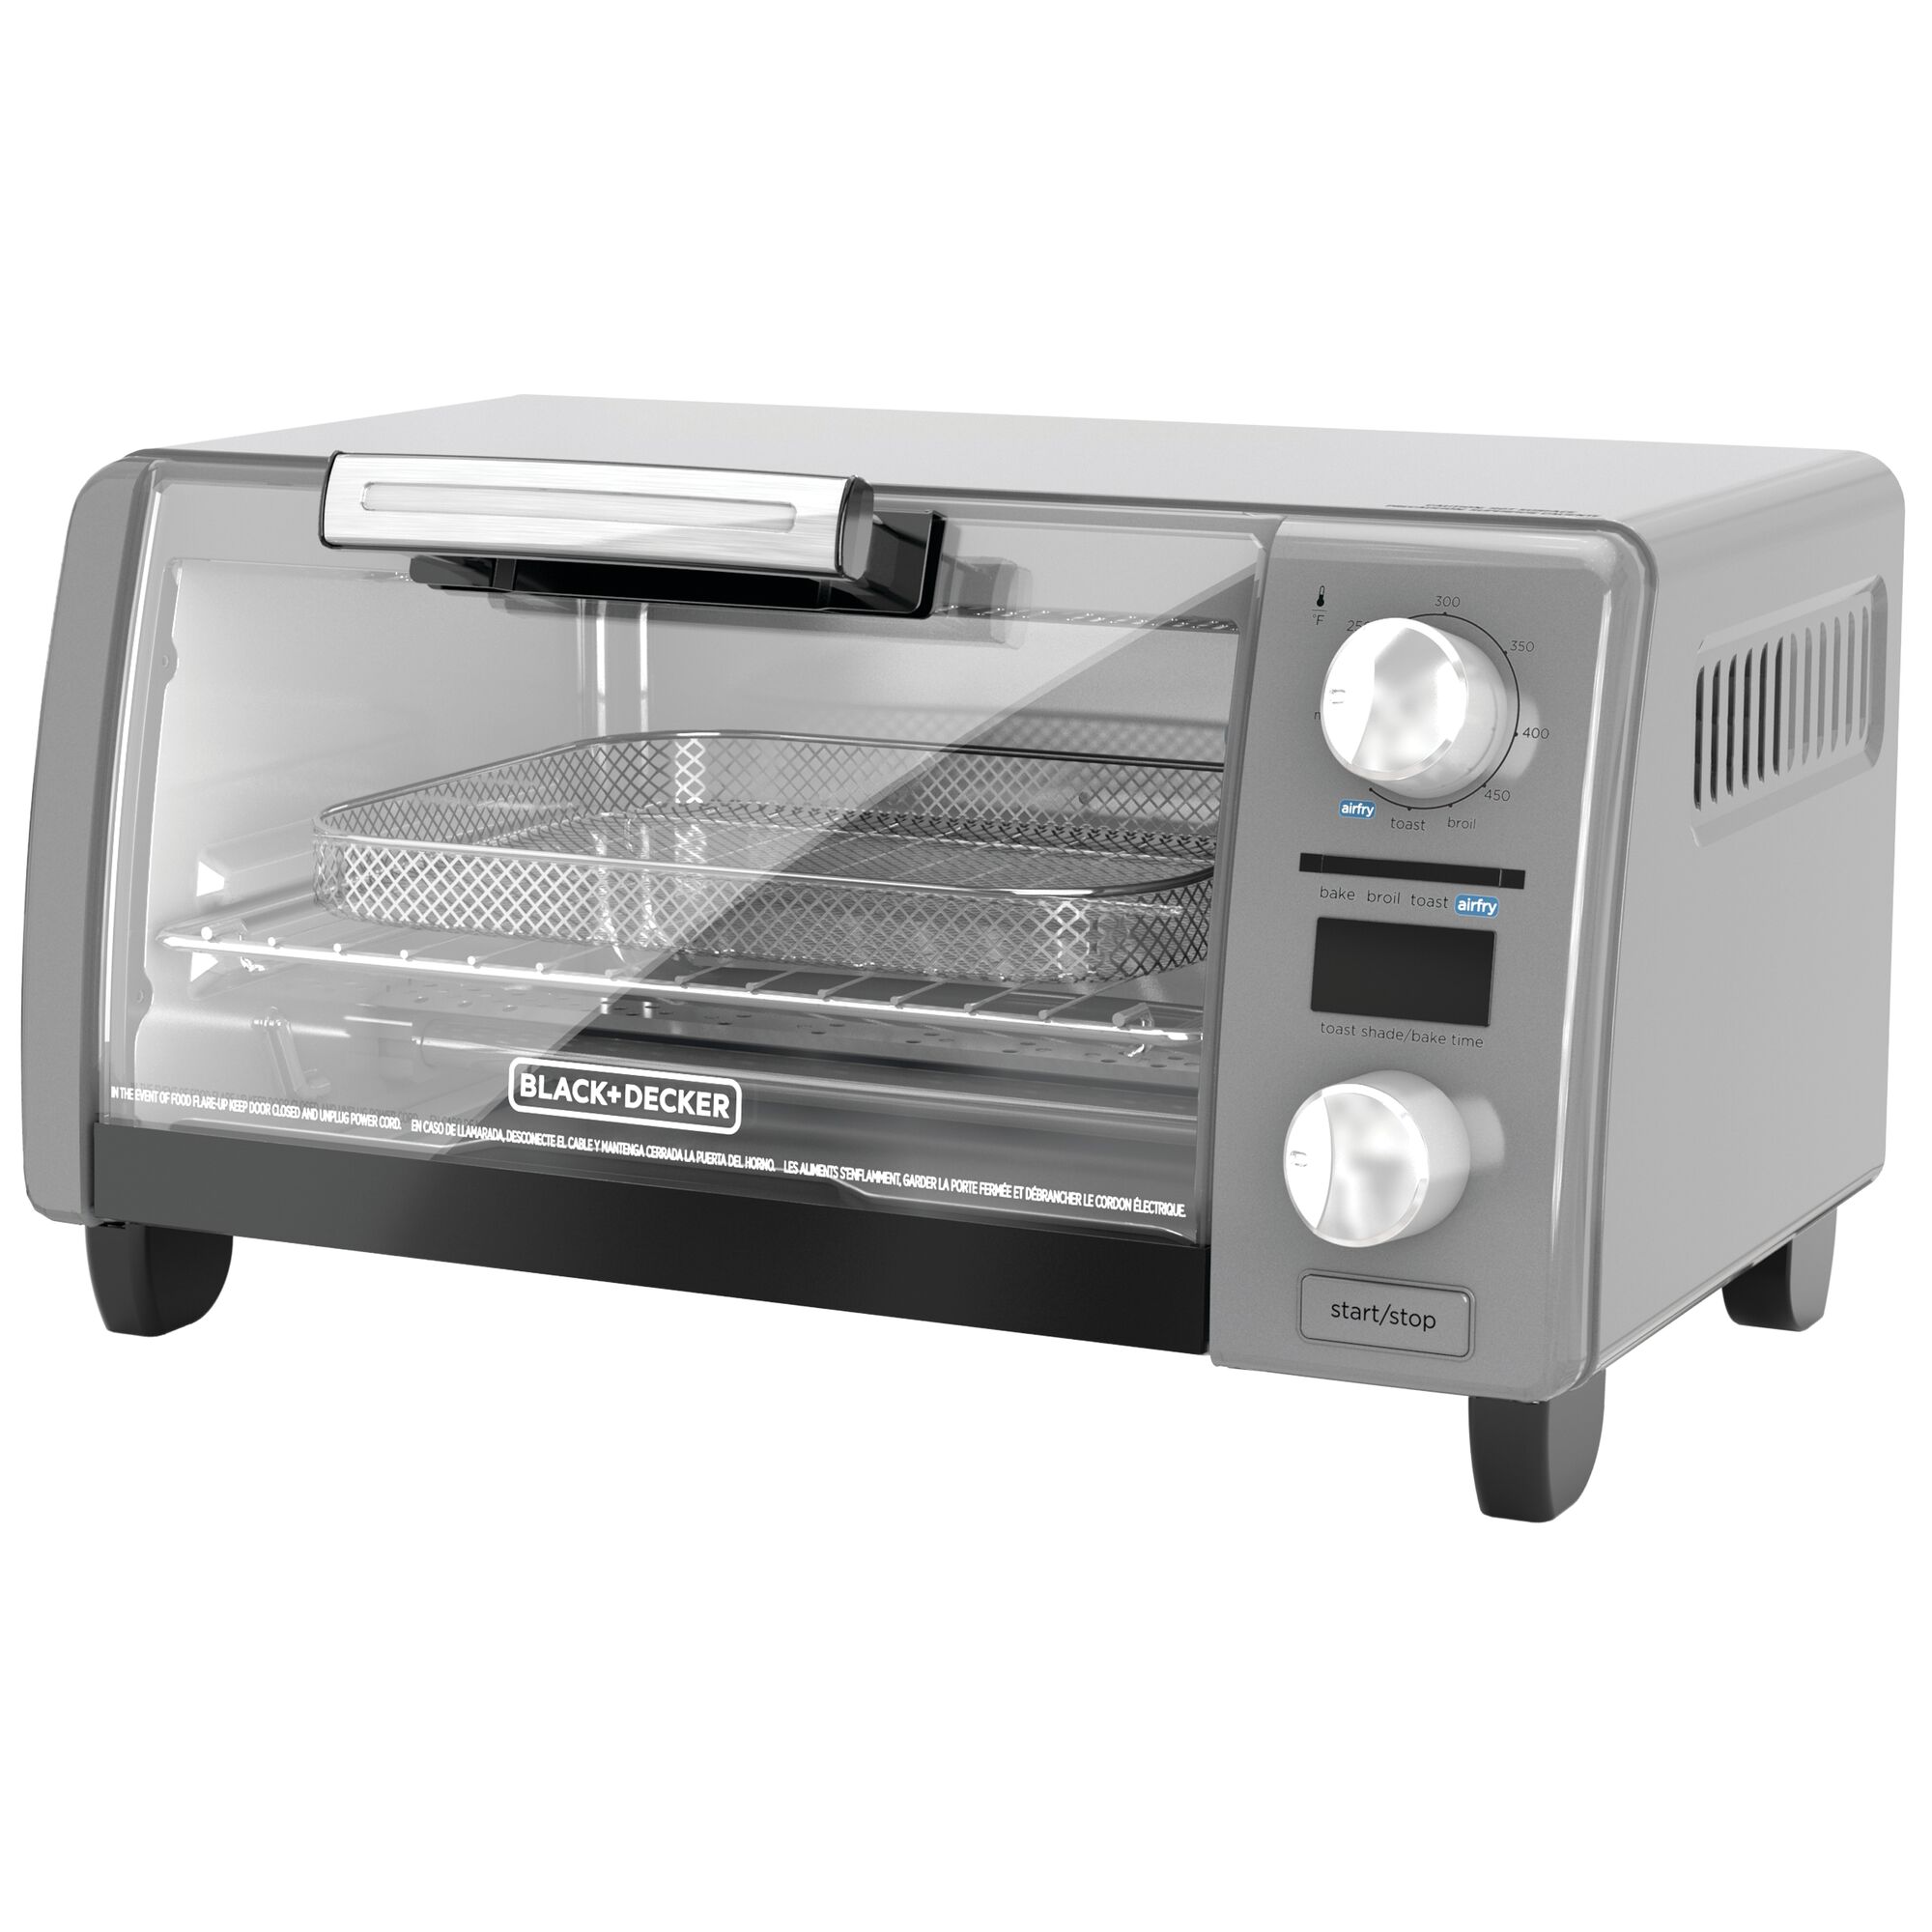 Crisp N Bake Air Fry Digital 4 Slice Toaster Oven.